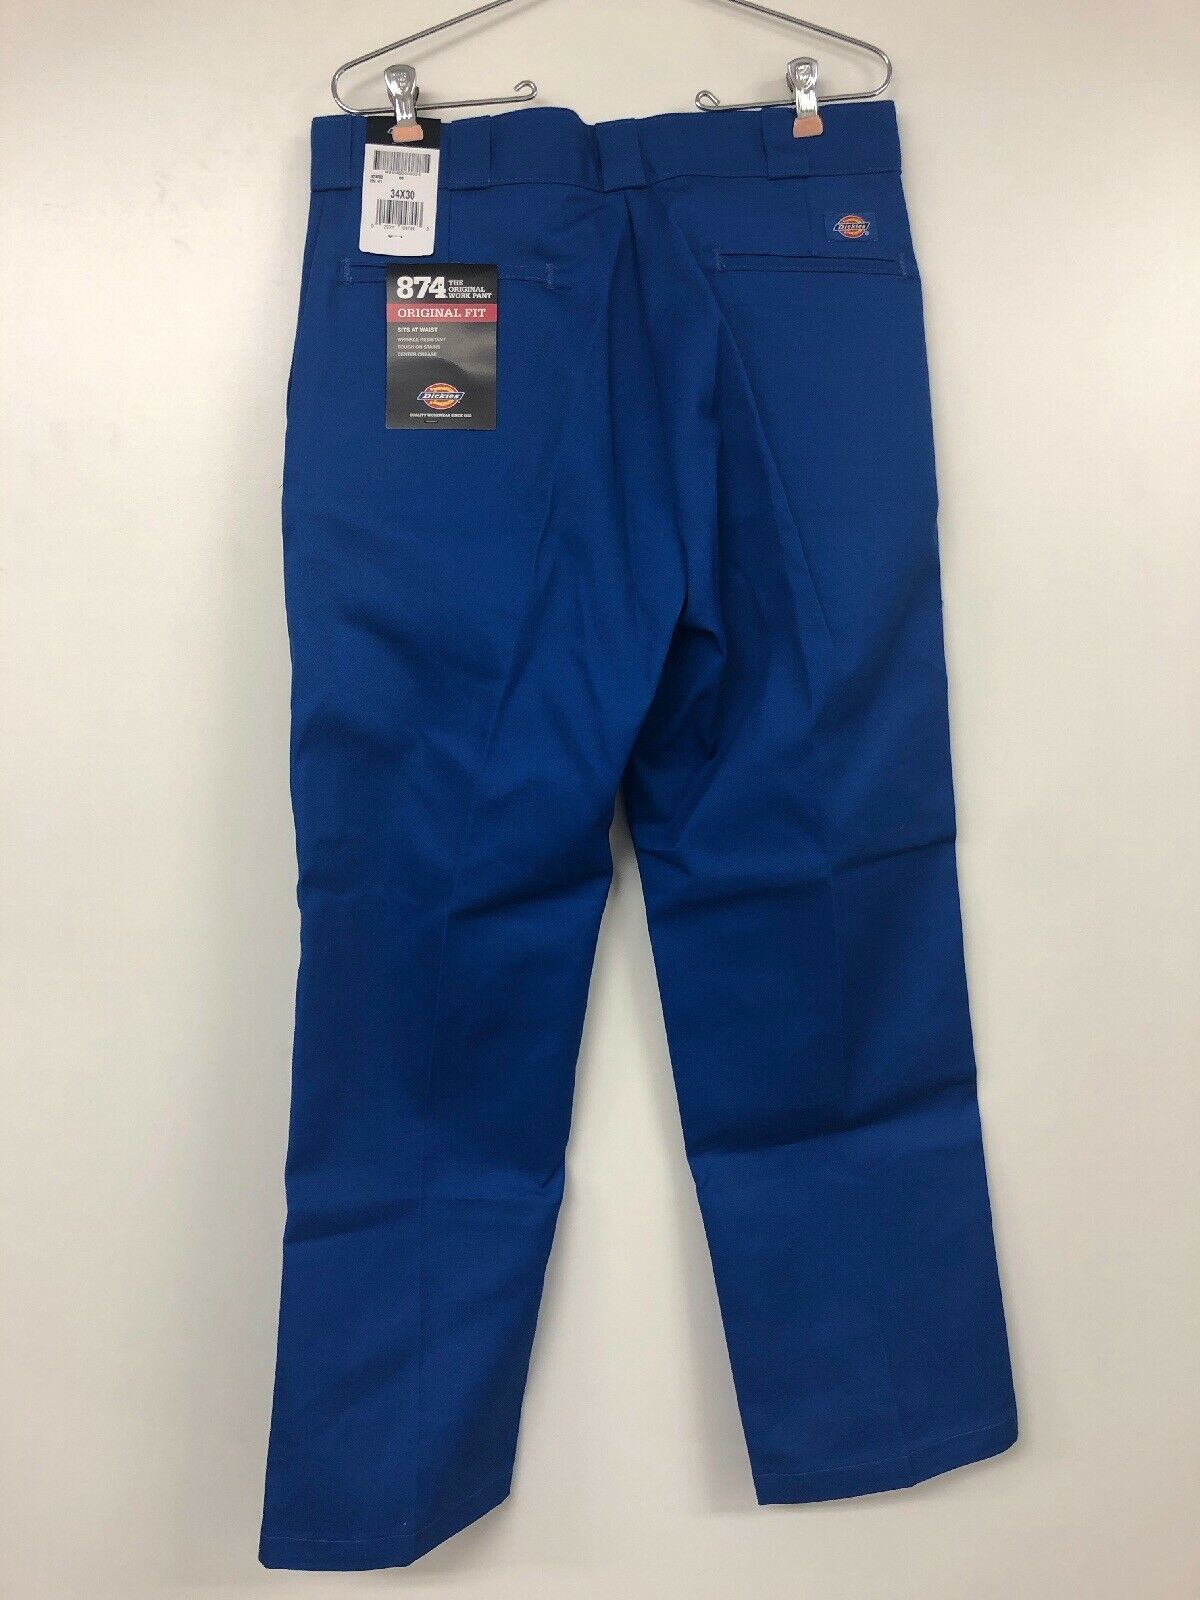 Dickies 874 Original Work Pants, Royal Blue, 34X30 - Pants